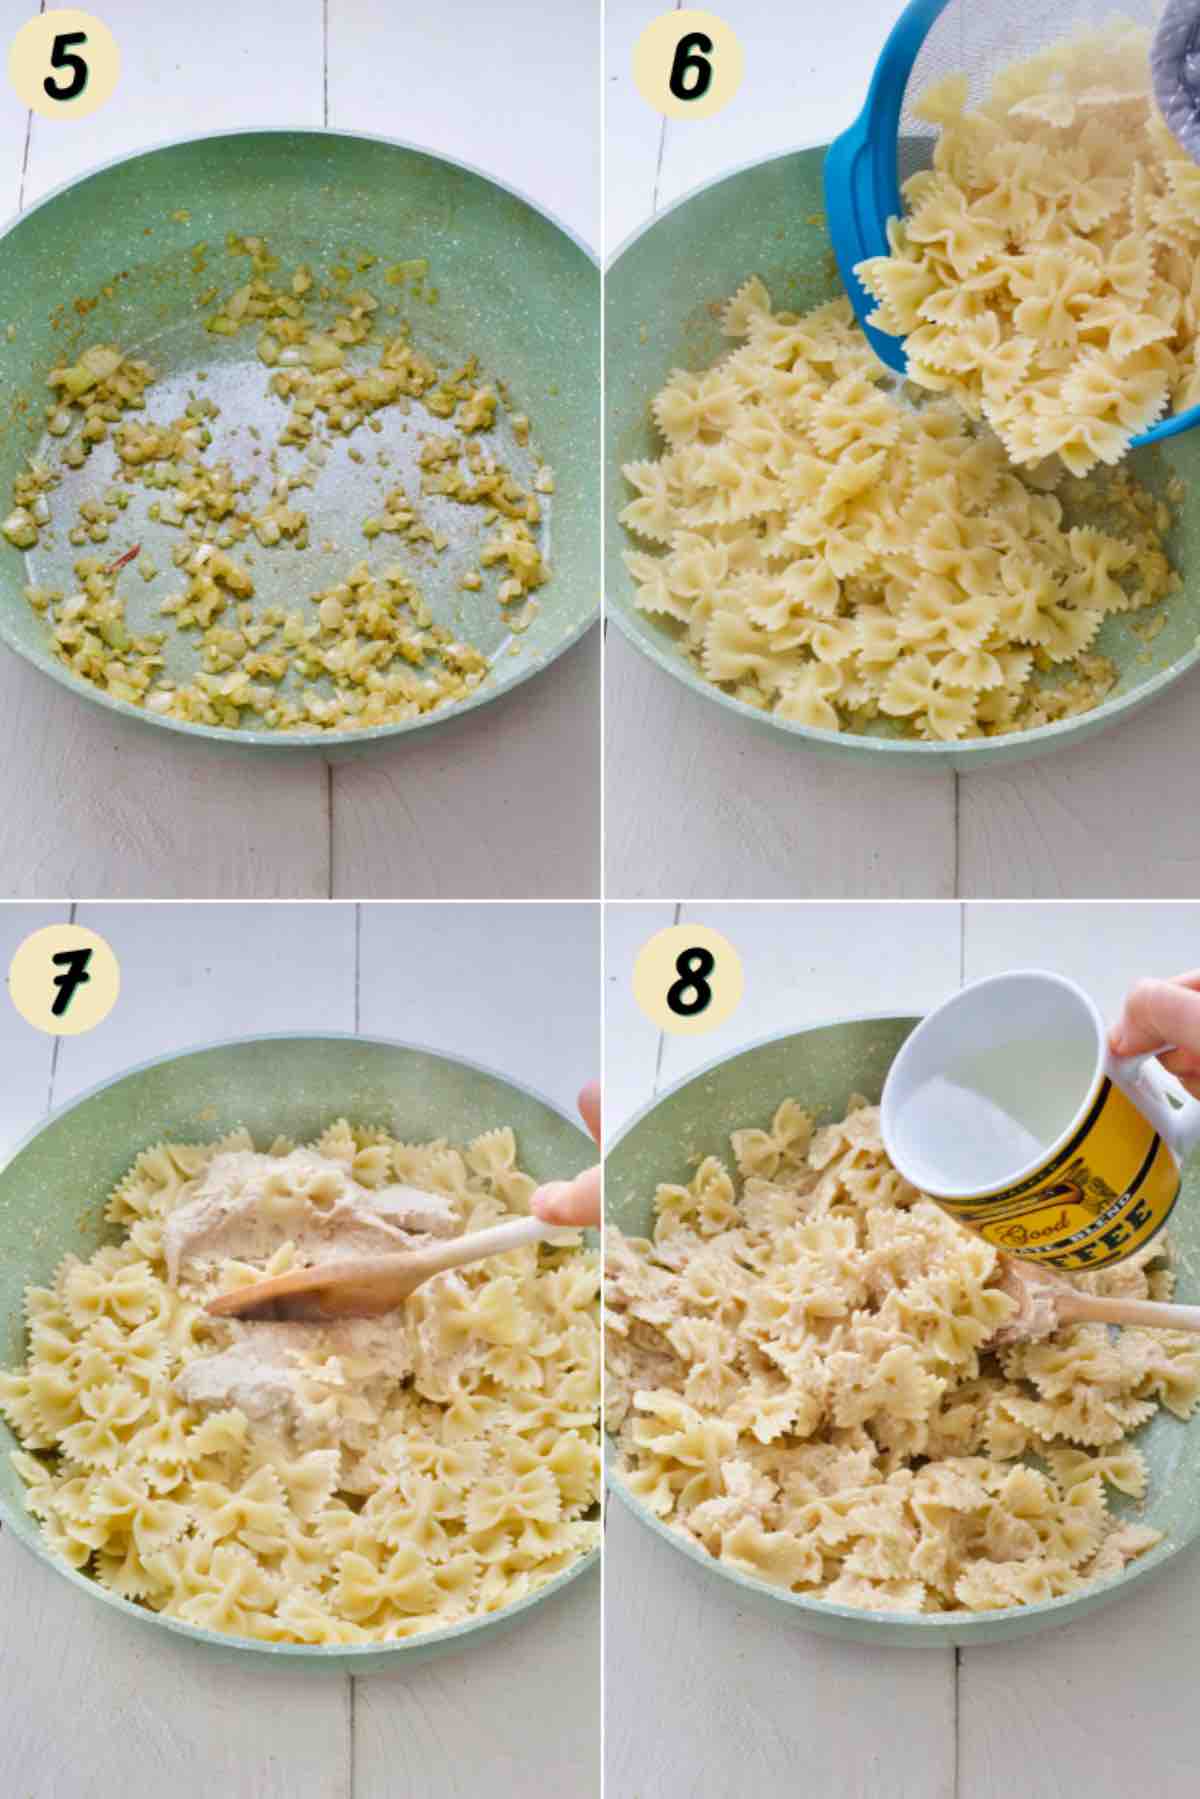 Process of making easy hummus pasta.